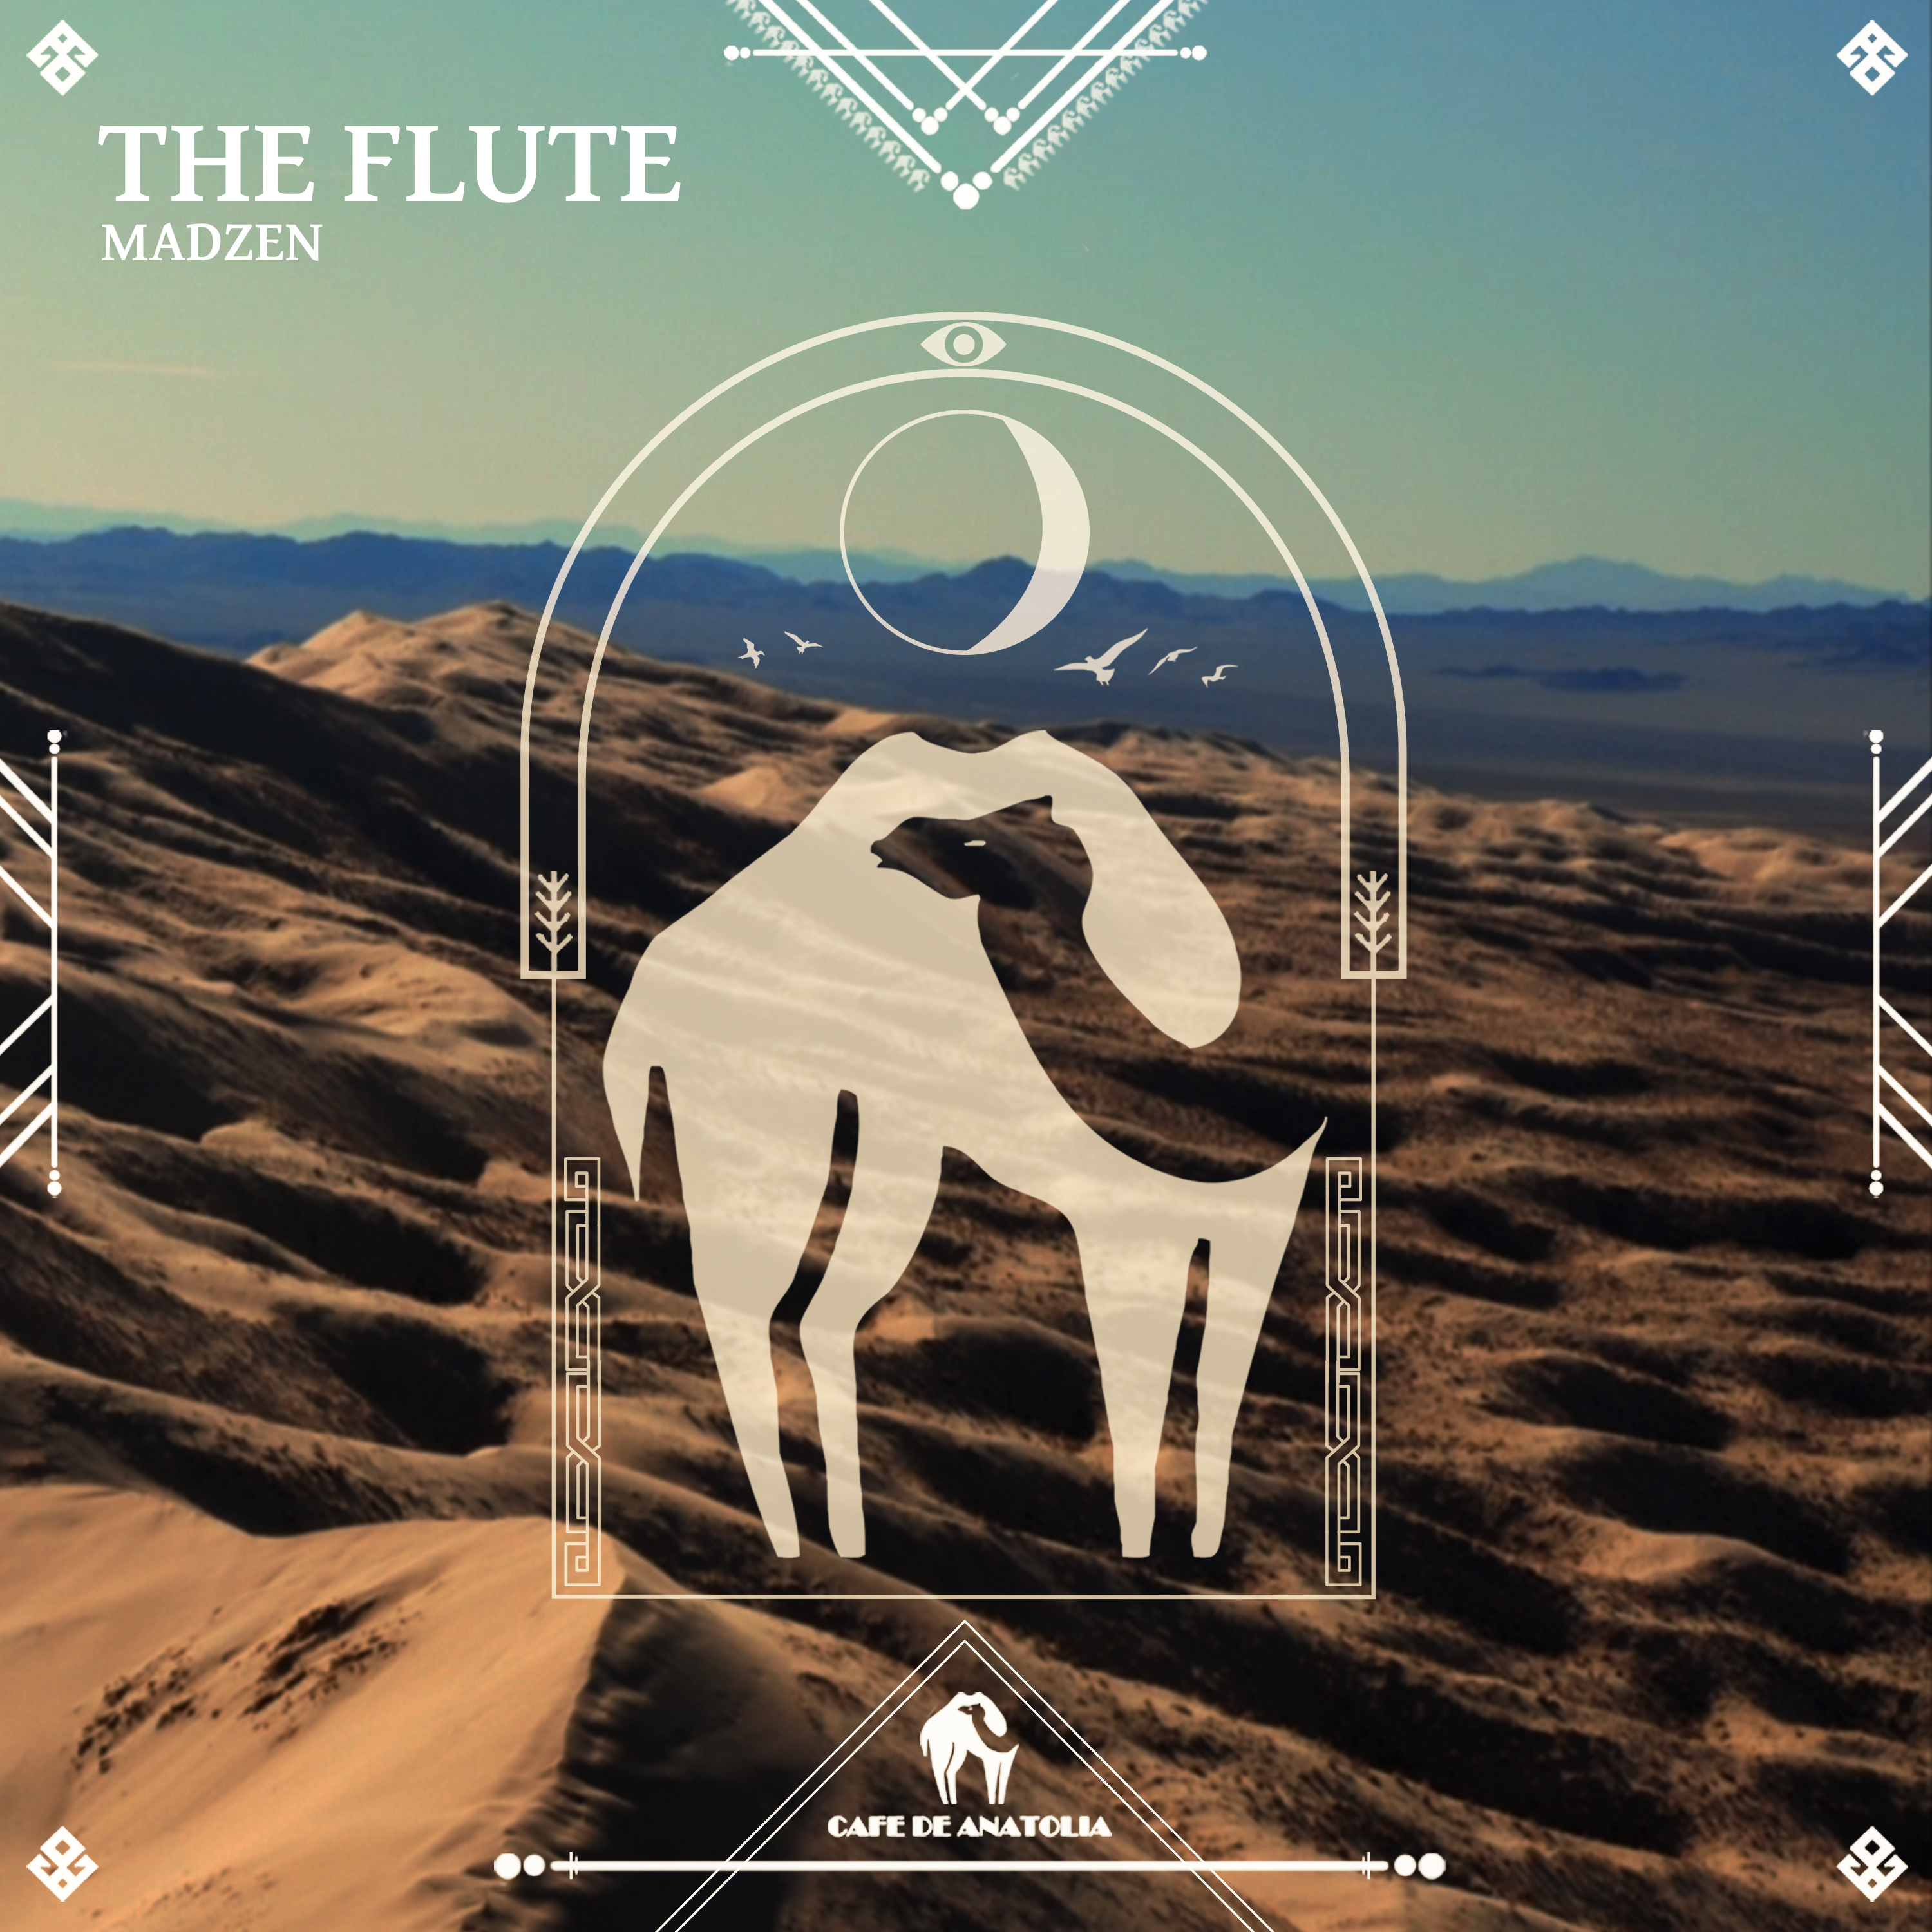 MadZen’s Magic New Single “The Flute”